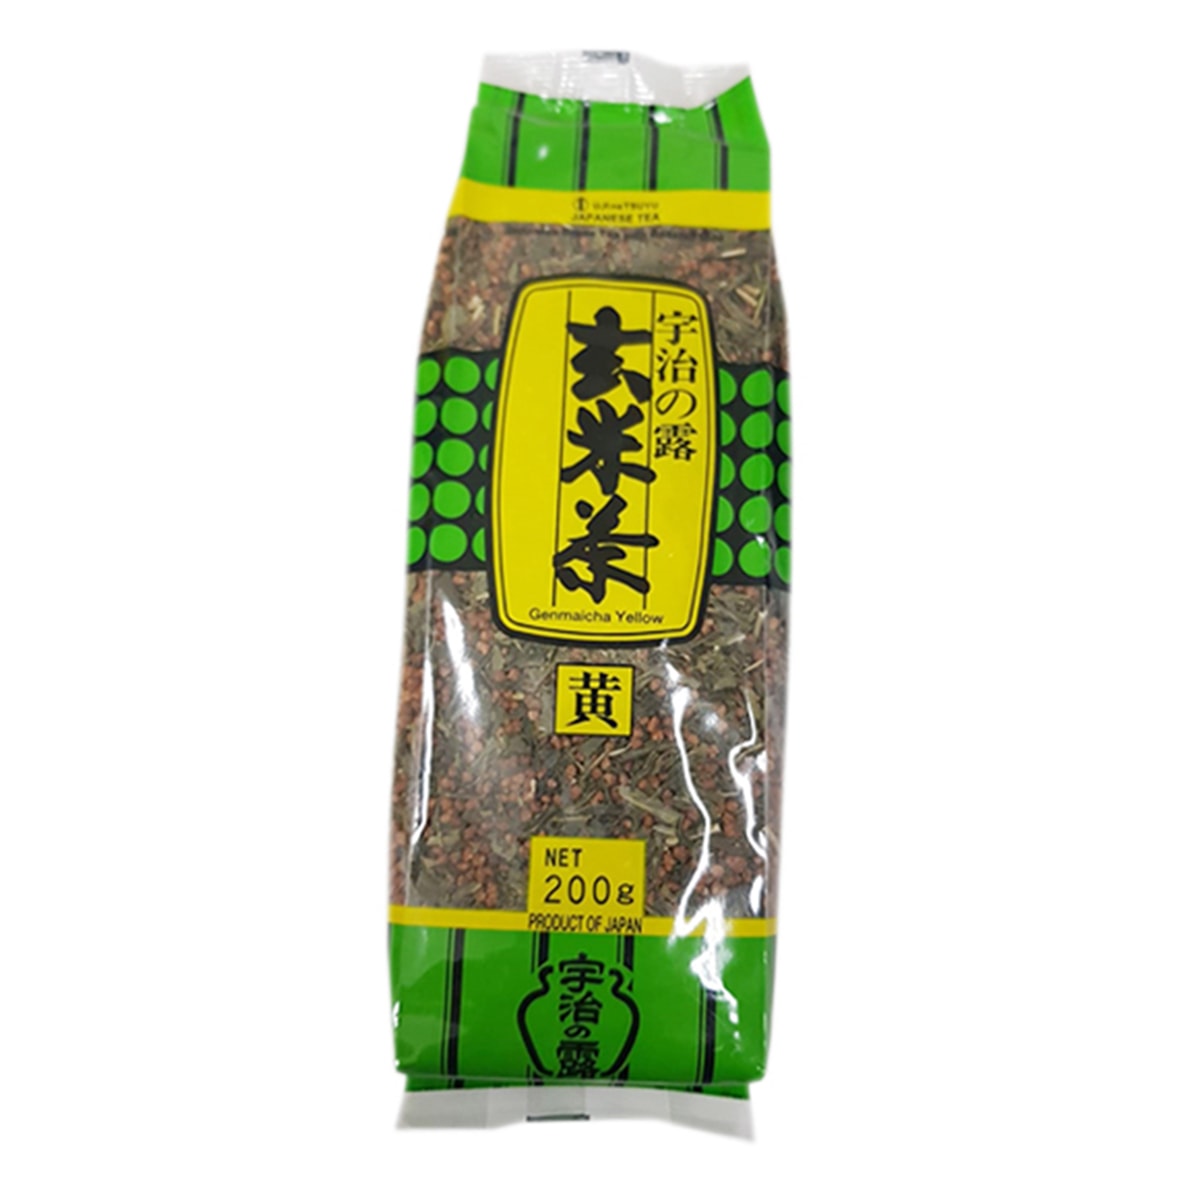 Buy Ujinotsuyu Japanese Green Tea with Roasted Rice (Genmaicha Yellow) - 200 gm